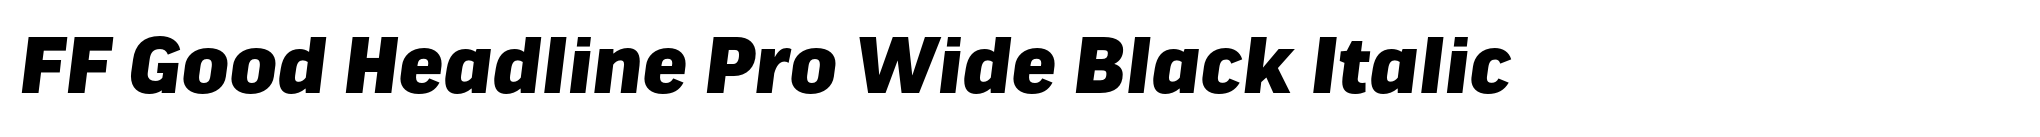 FF Good Headline Pro Wide Black Italic image